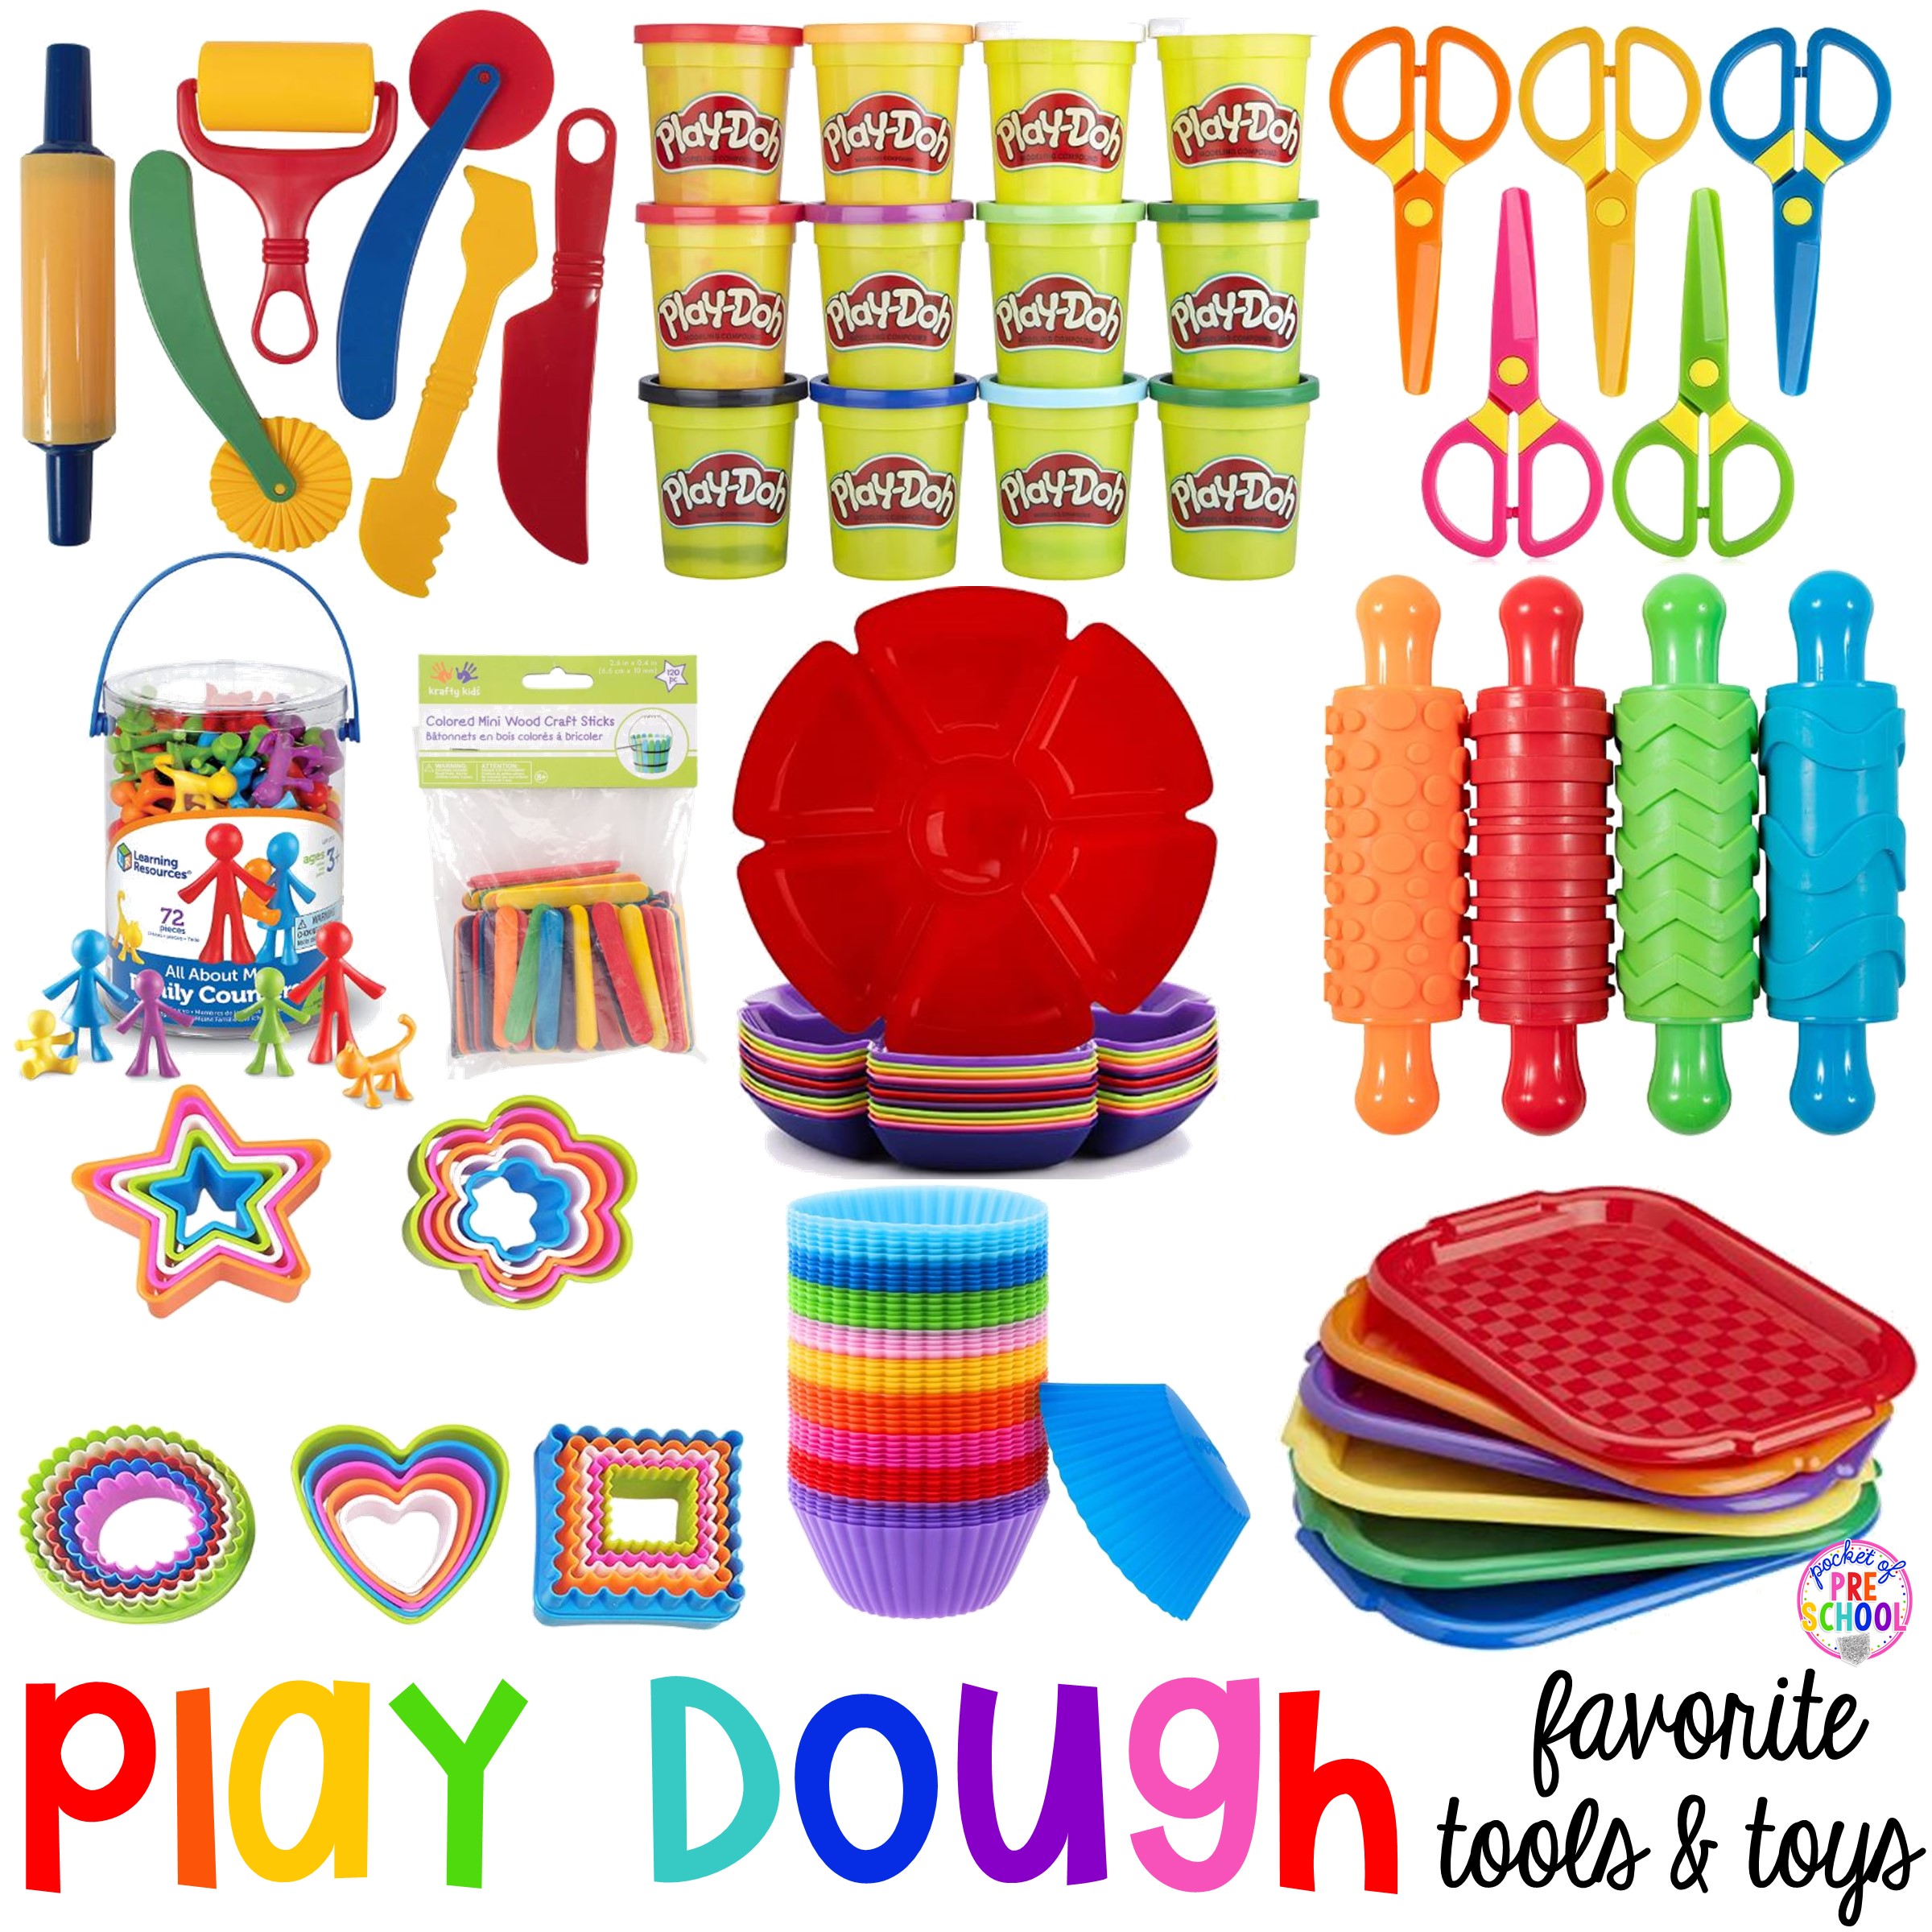 Favorite Play Dough Toy & Tools for Preschool, Pre-K